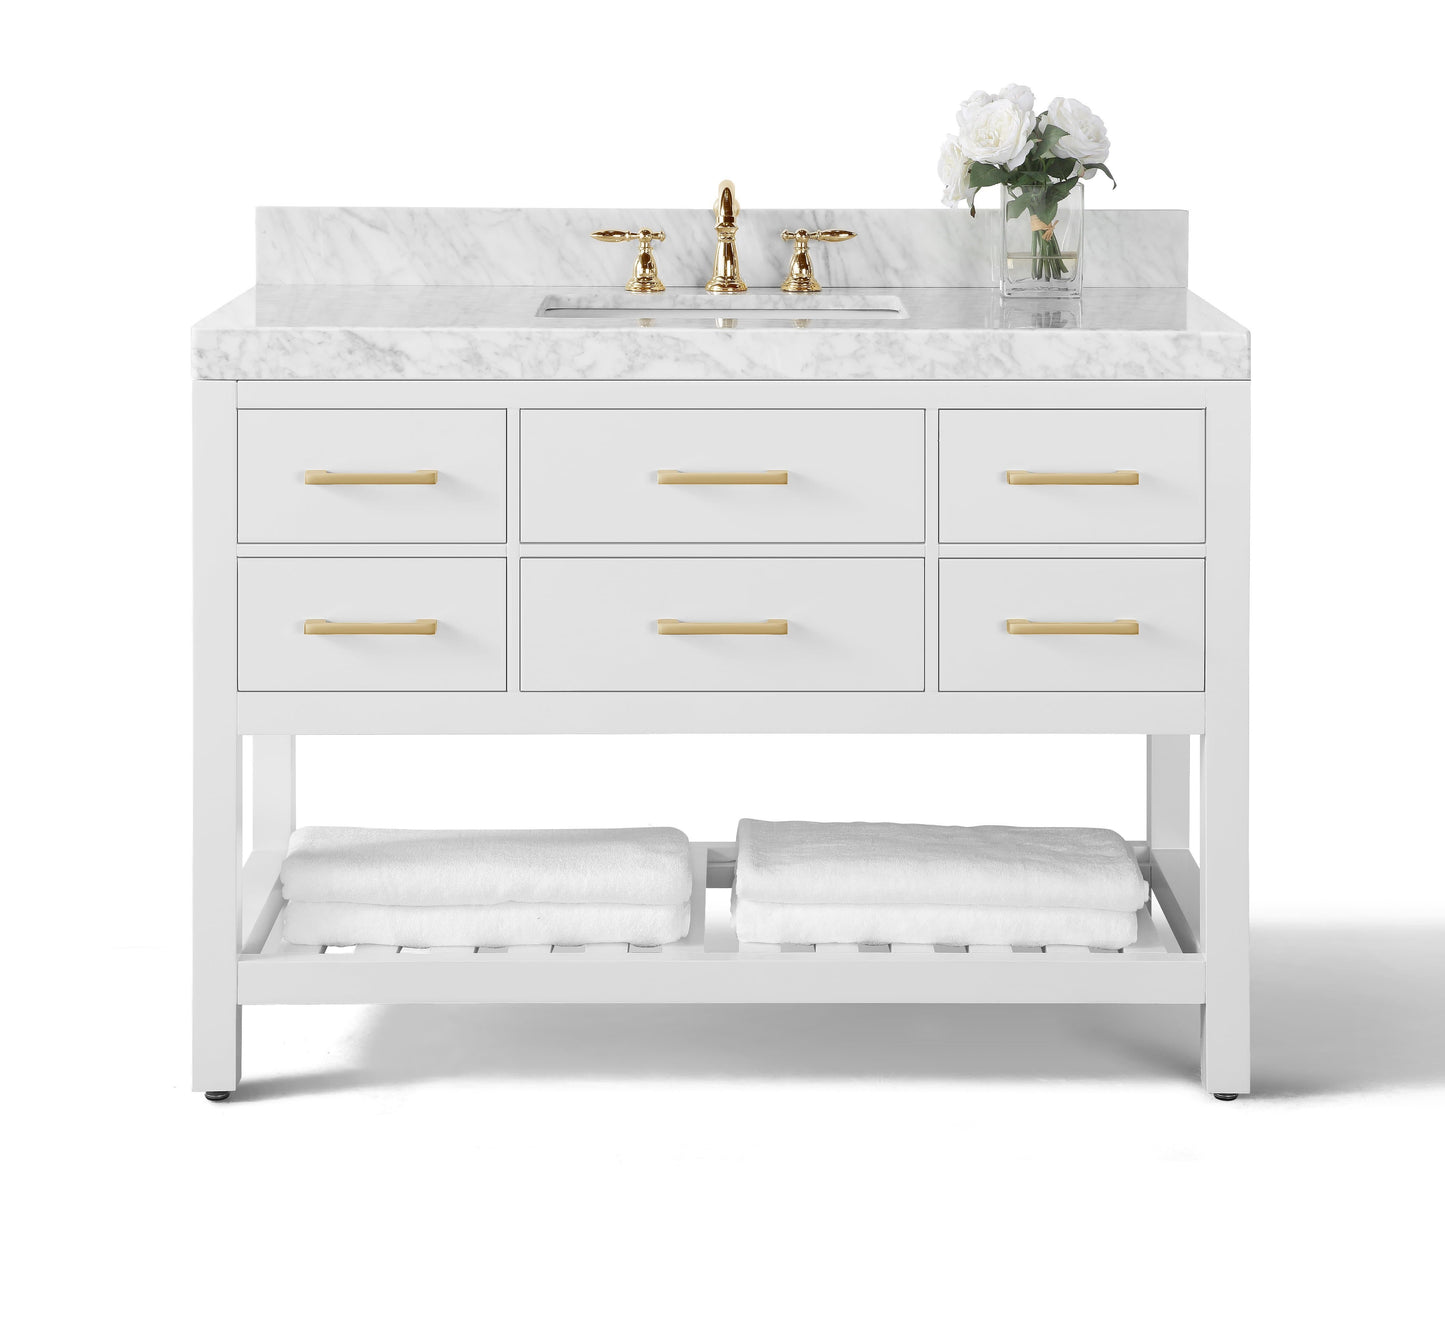 Ancerra Designs Elizabeth 48 in. Bath Vanity Set in White with Gold Hardware